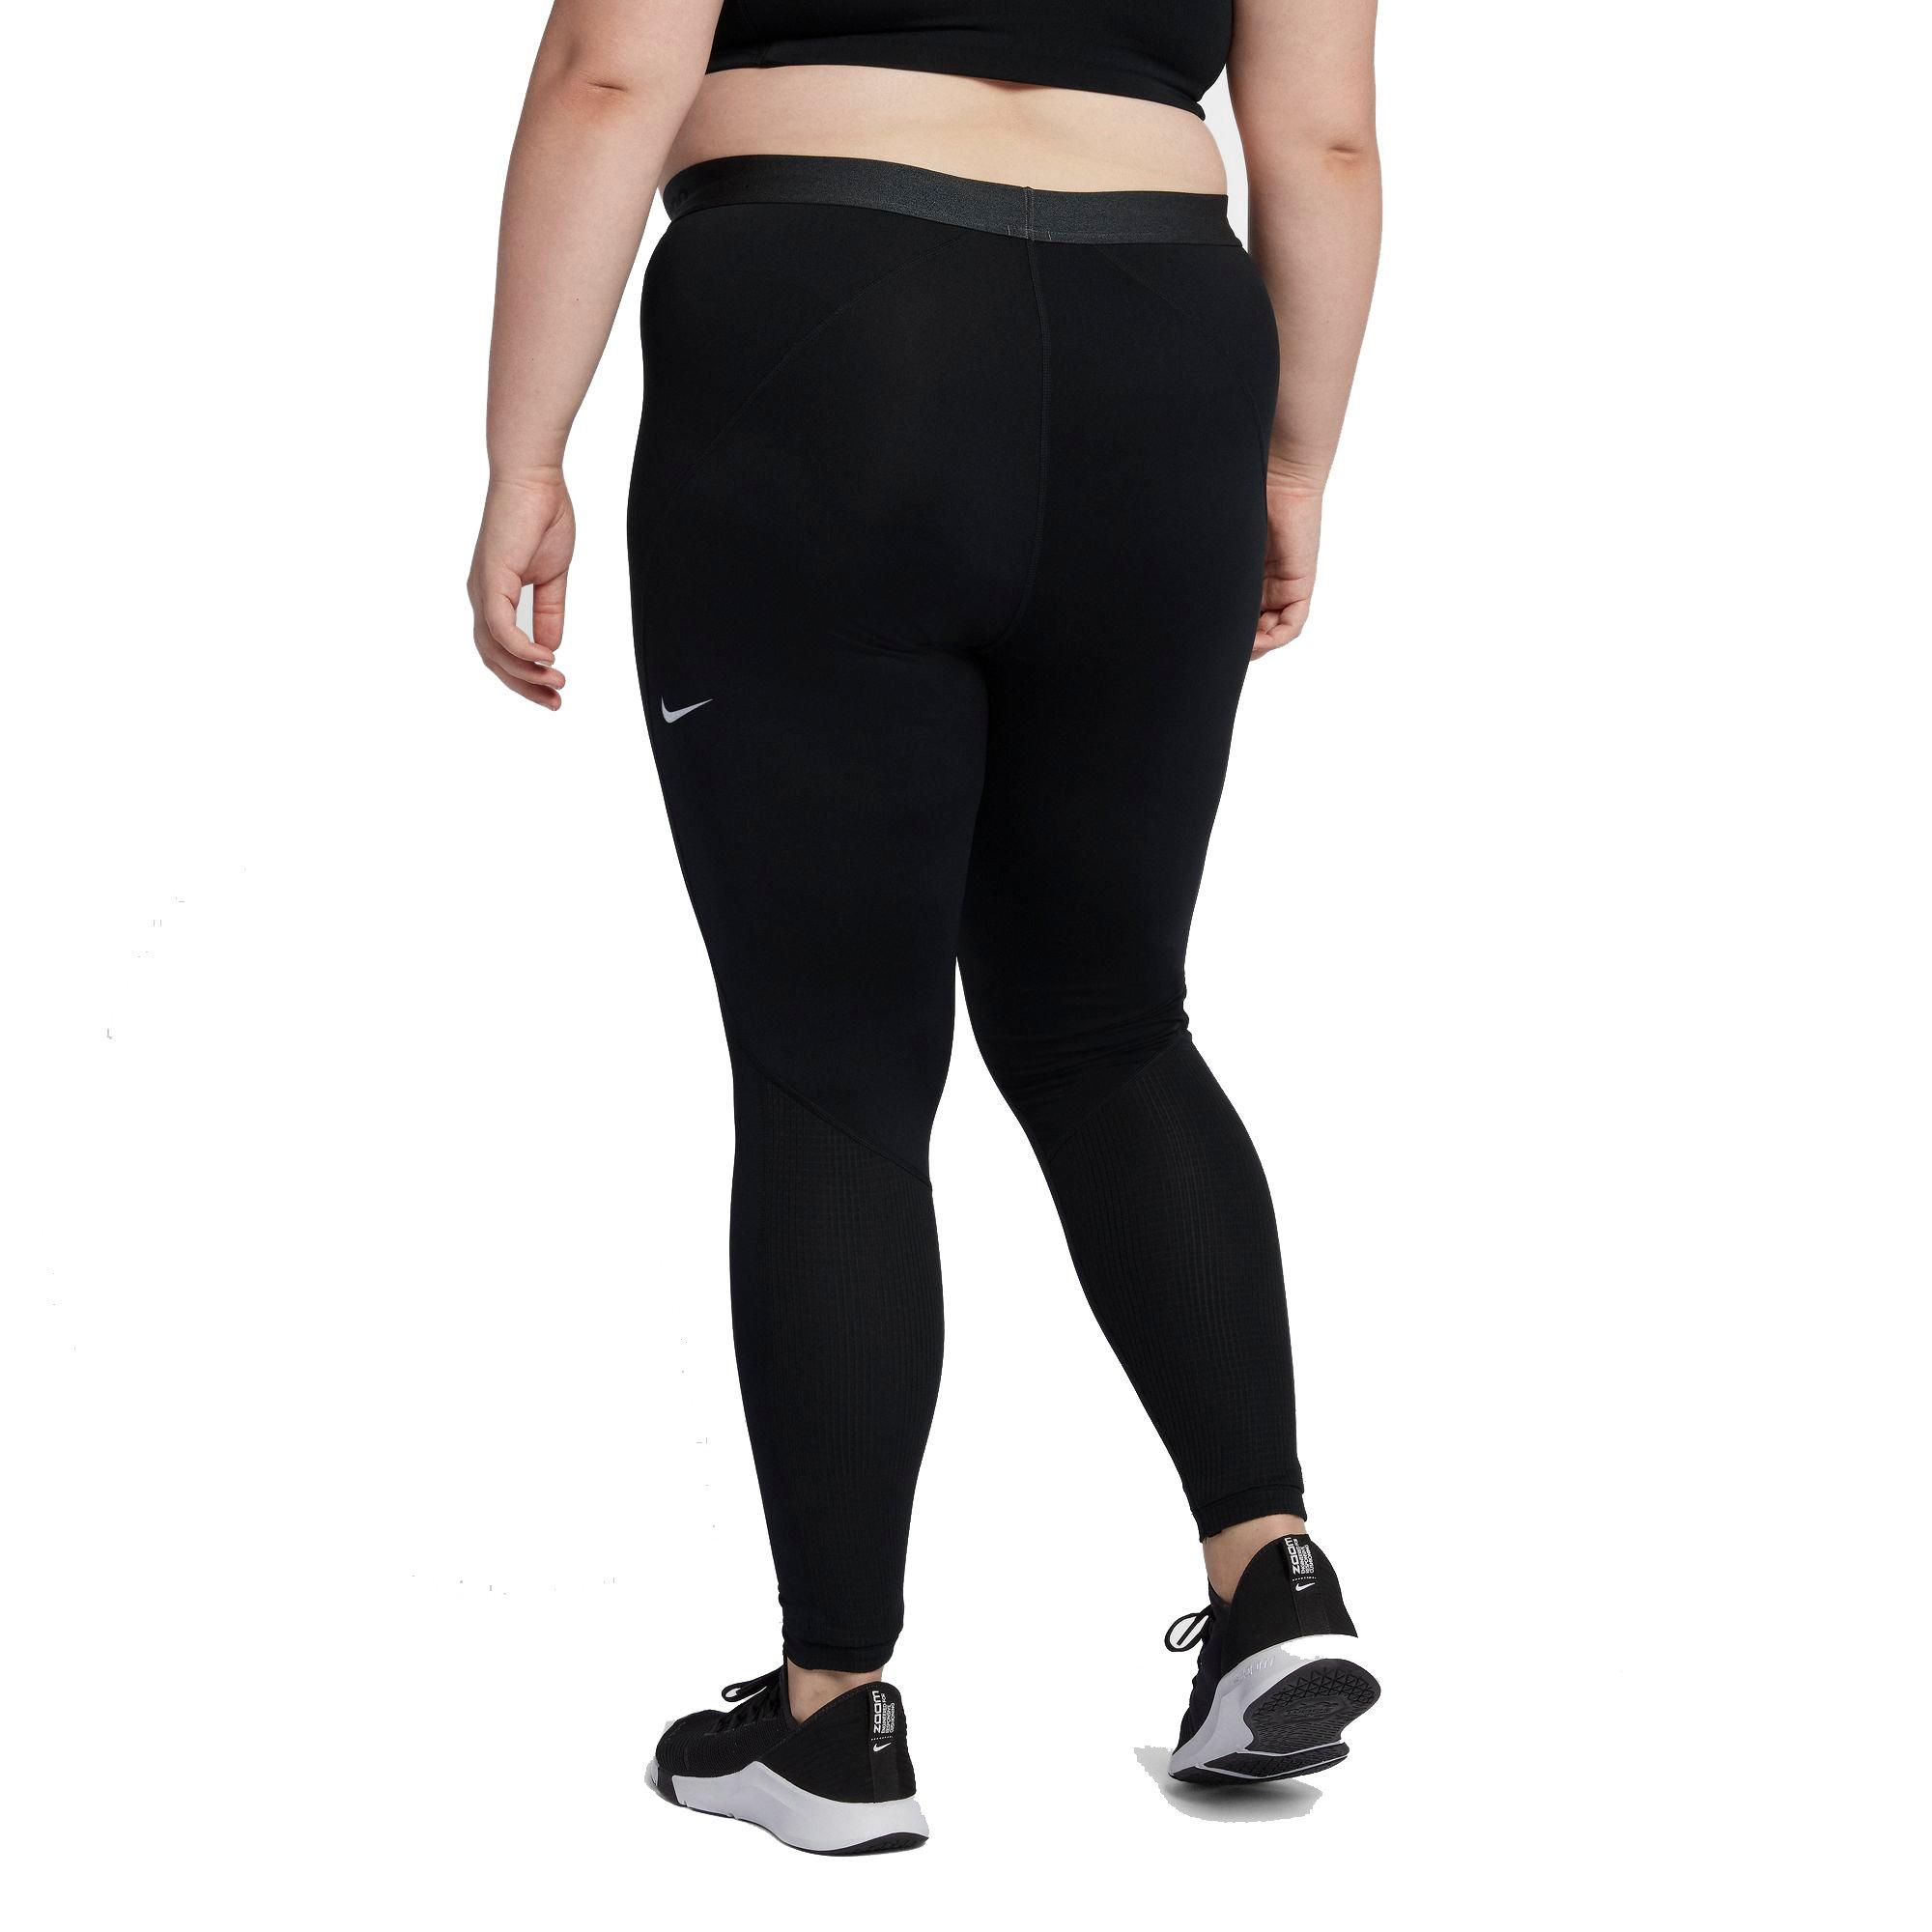 Nike Women's Pro Warm Tights-Black 